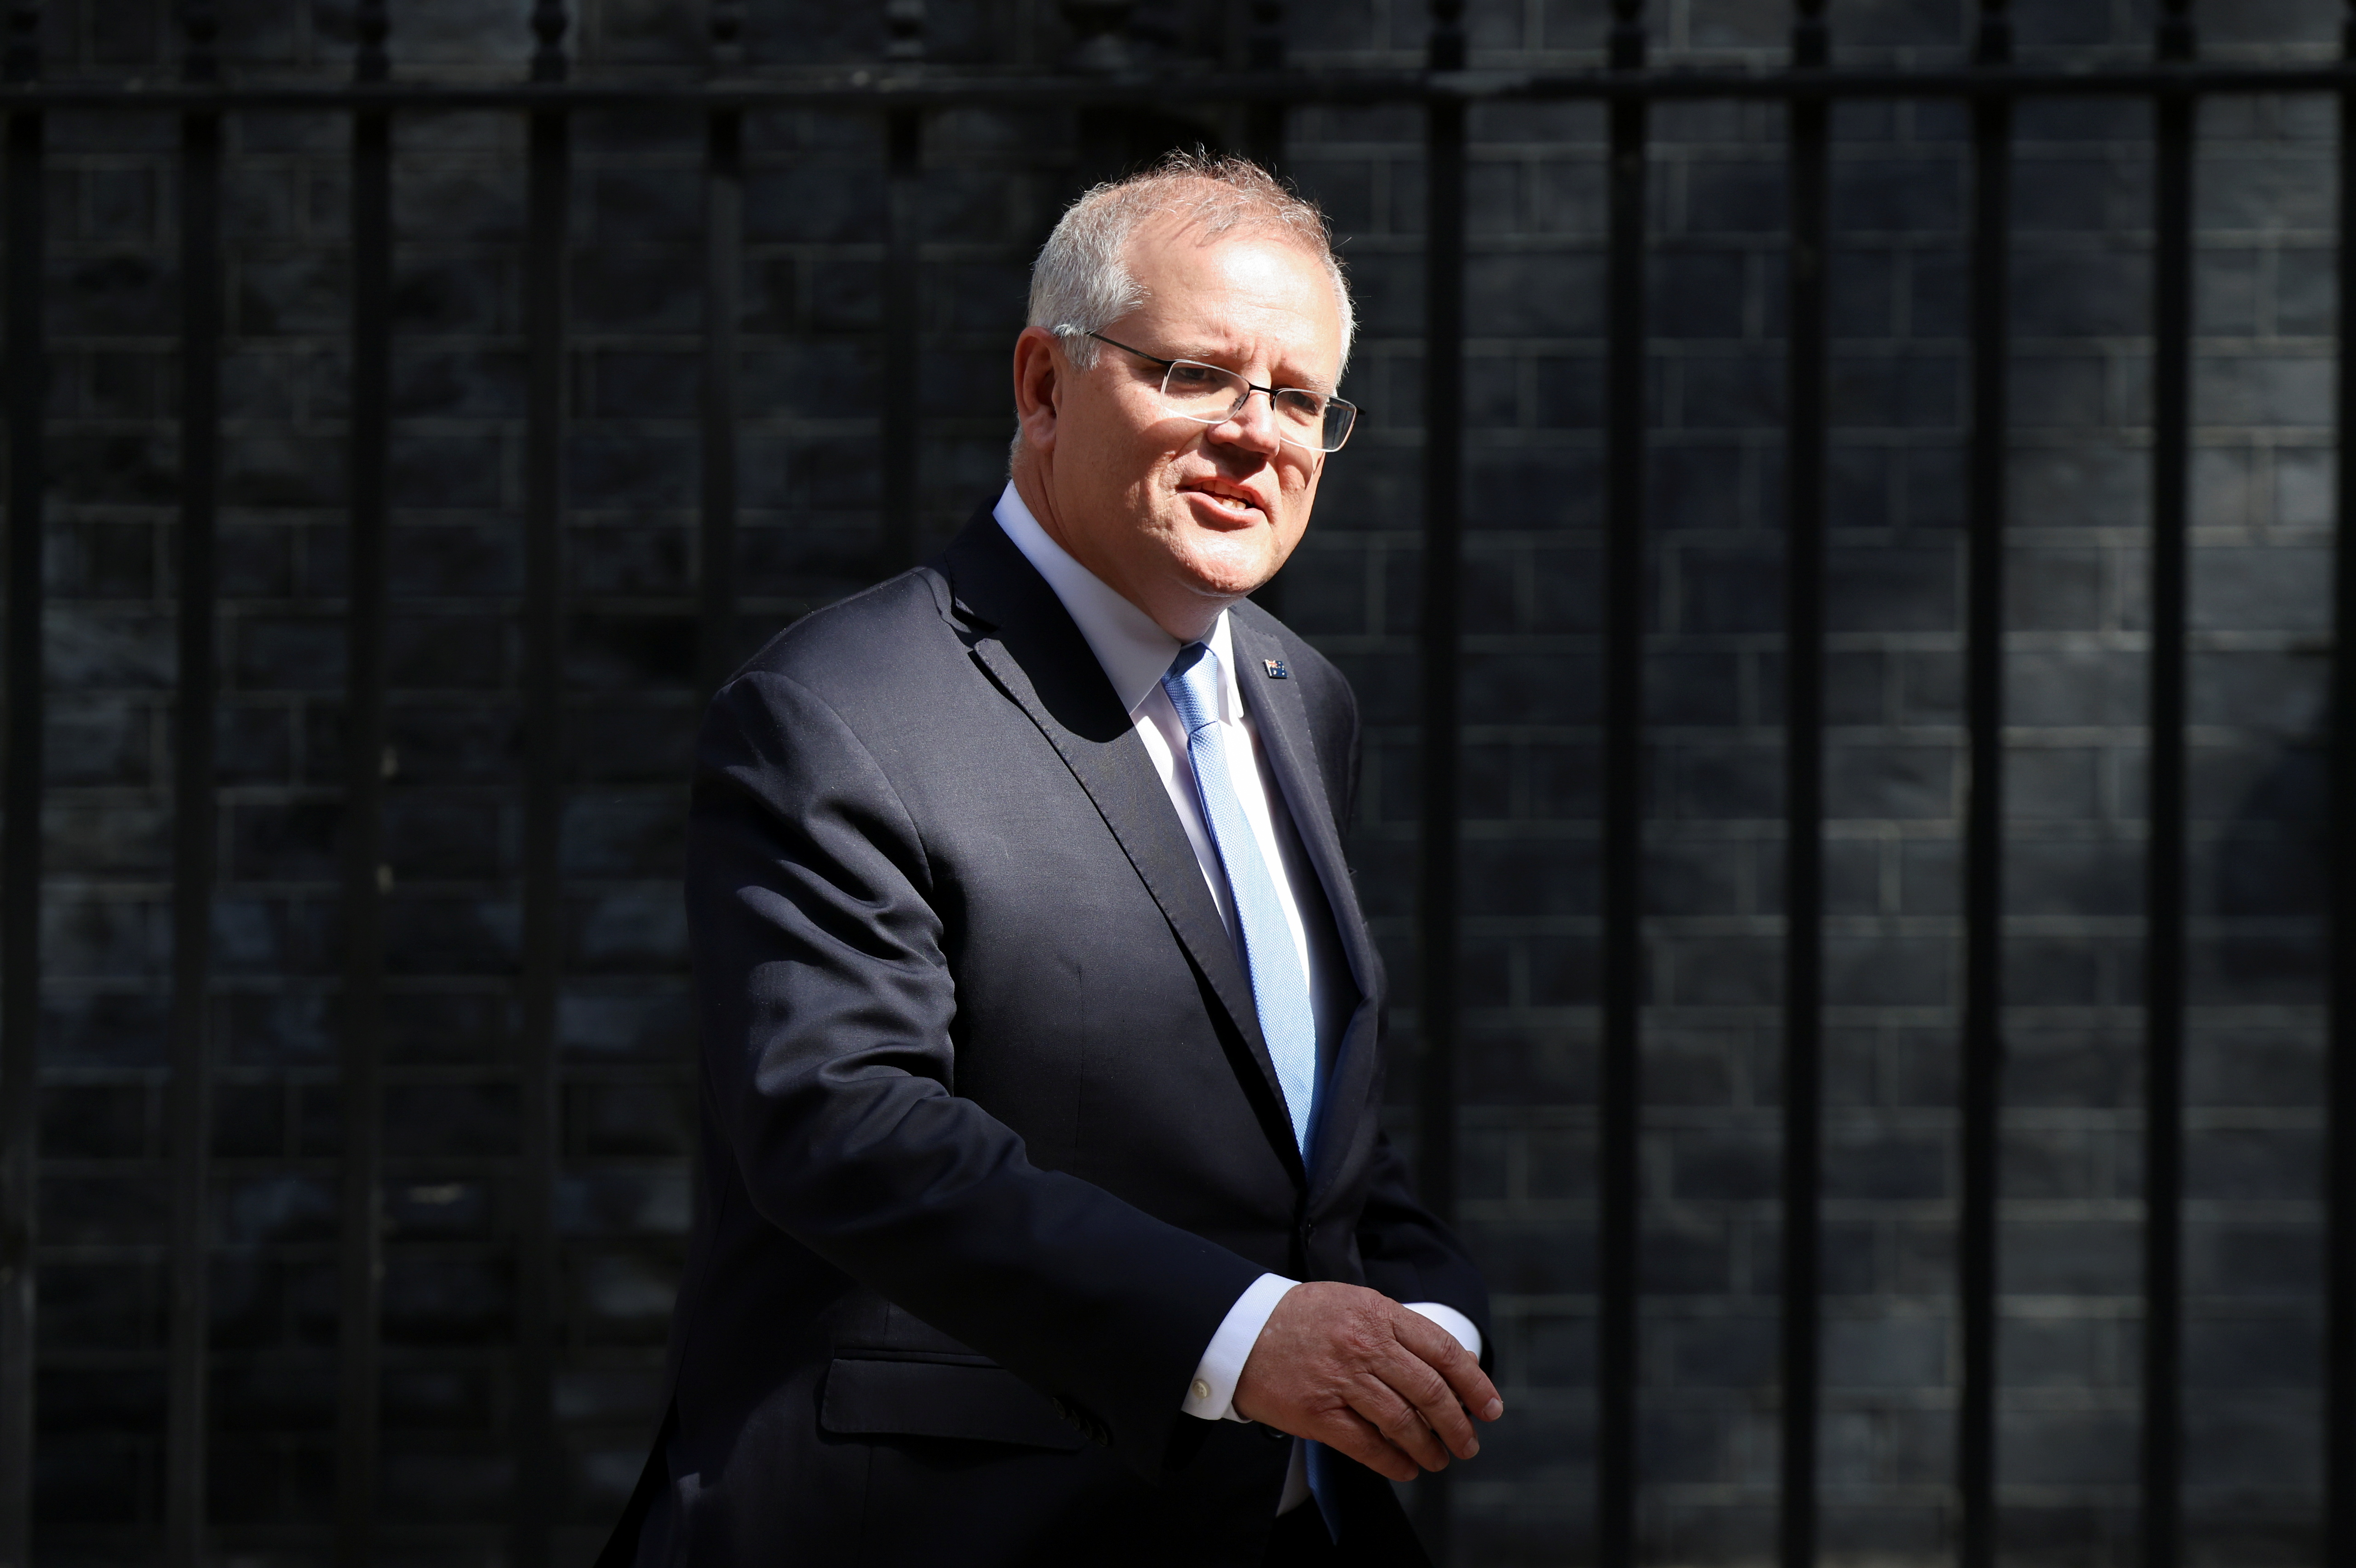 Australian Prime Minister Scott Morrison leaves Downing Street in London, Britain, June 15, 2021. REUTERS/Henry Nicholls